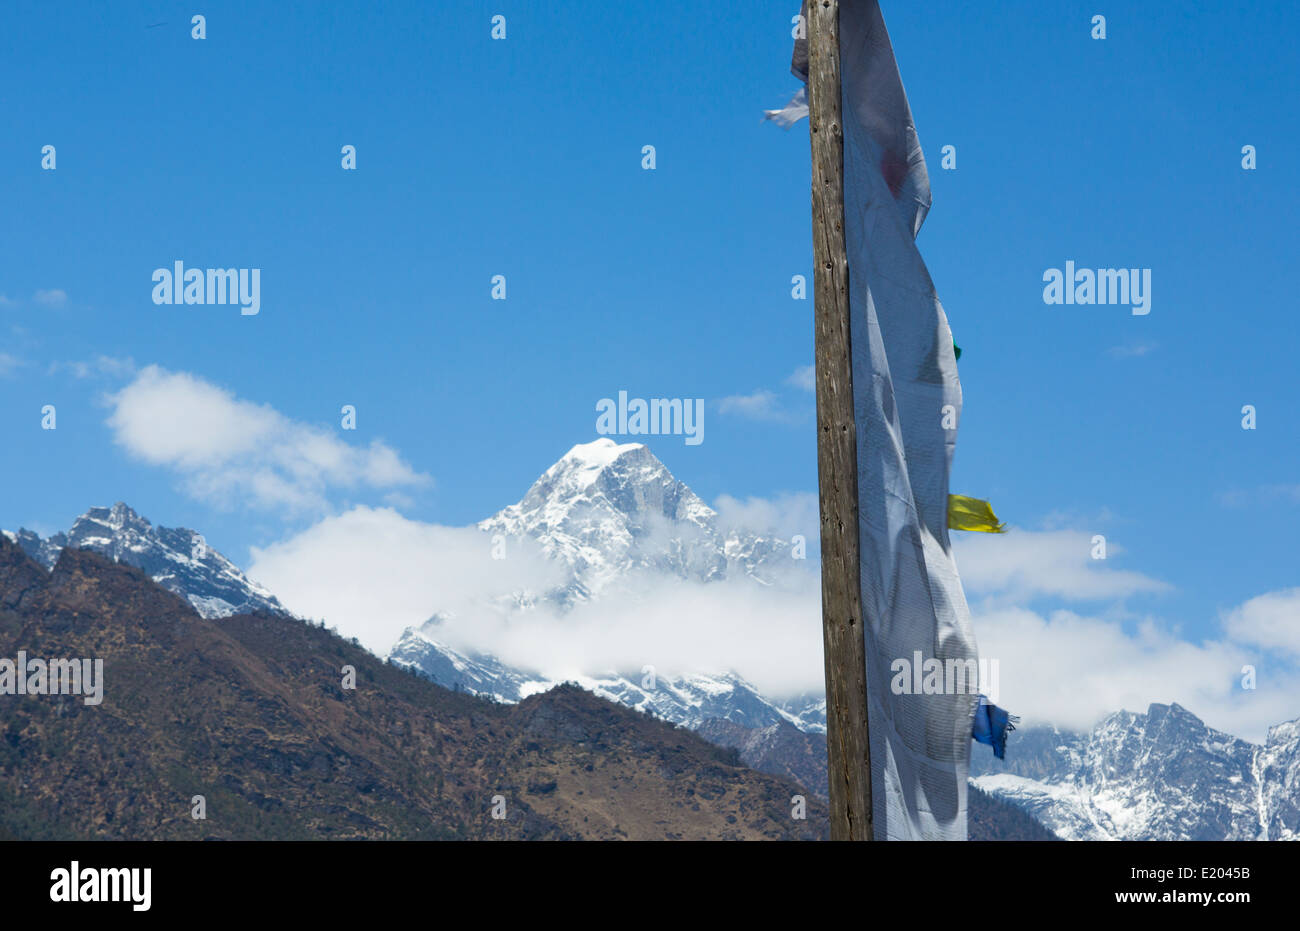 Nepal Prayer flag with the Himalayas in the background Solukhumbu Stock Photo